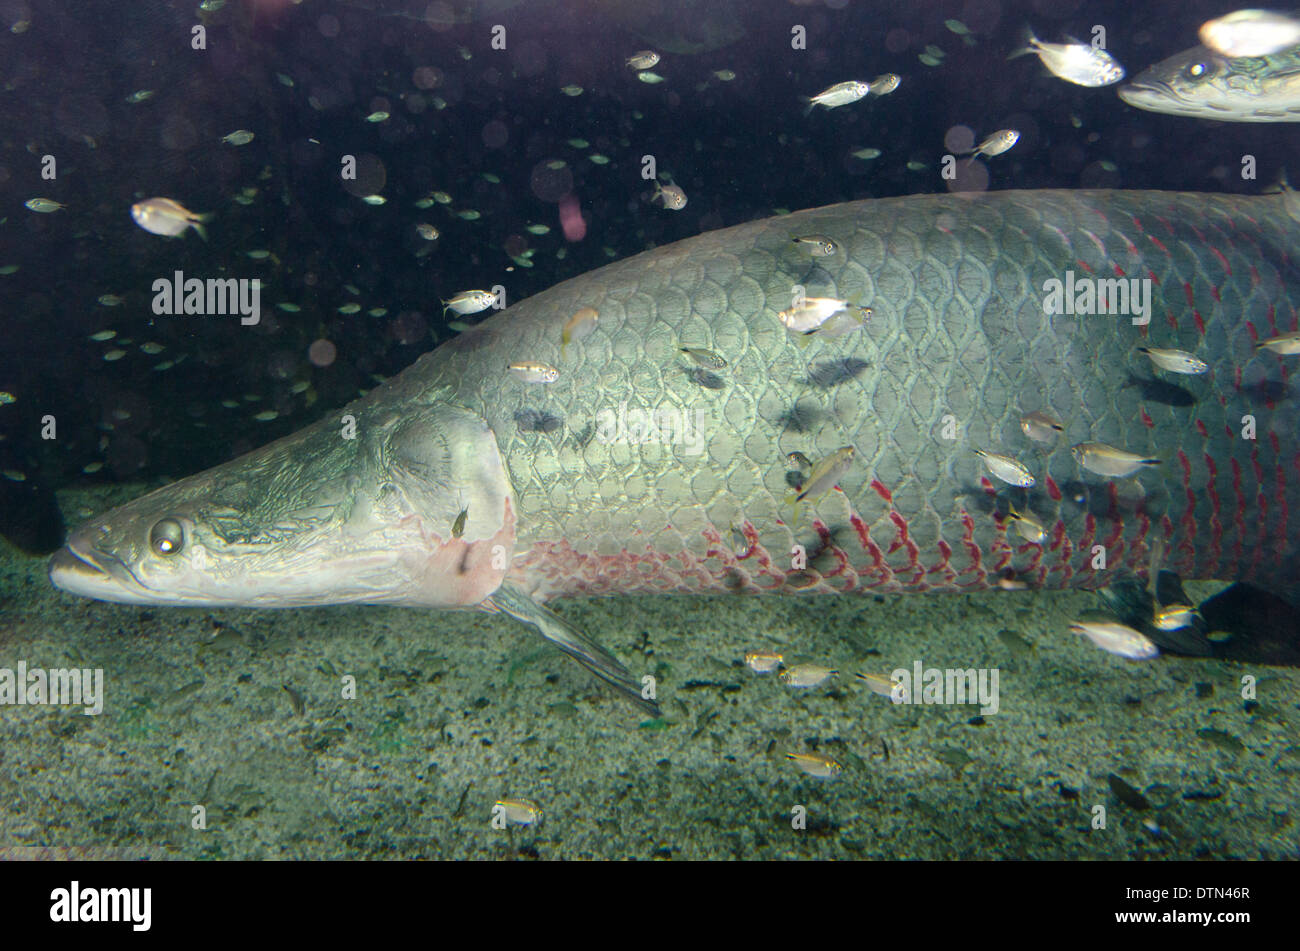 Brasilien, Sao Paulo, Santos. Guaruja, Aqua Mundo. Pirarucu, große Fische  heimisch in Amazon River Stockfotografie - Alamy